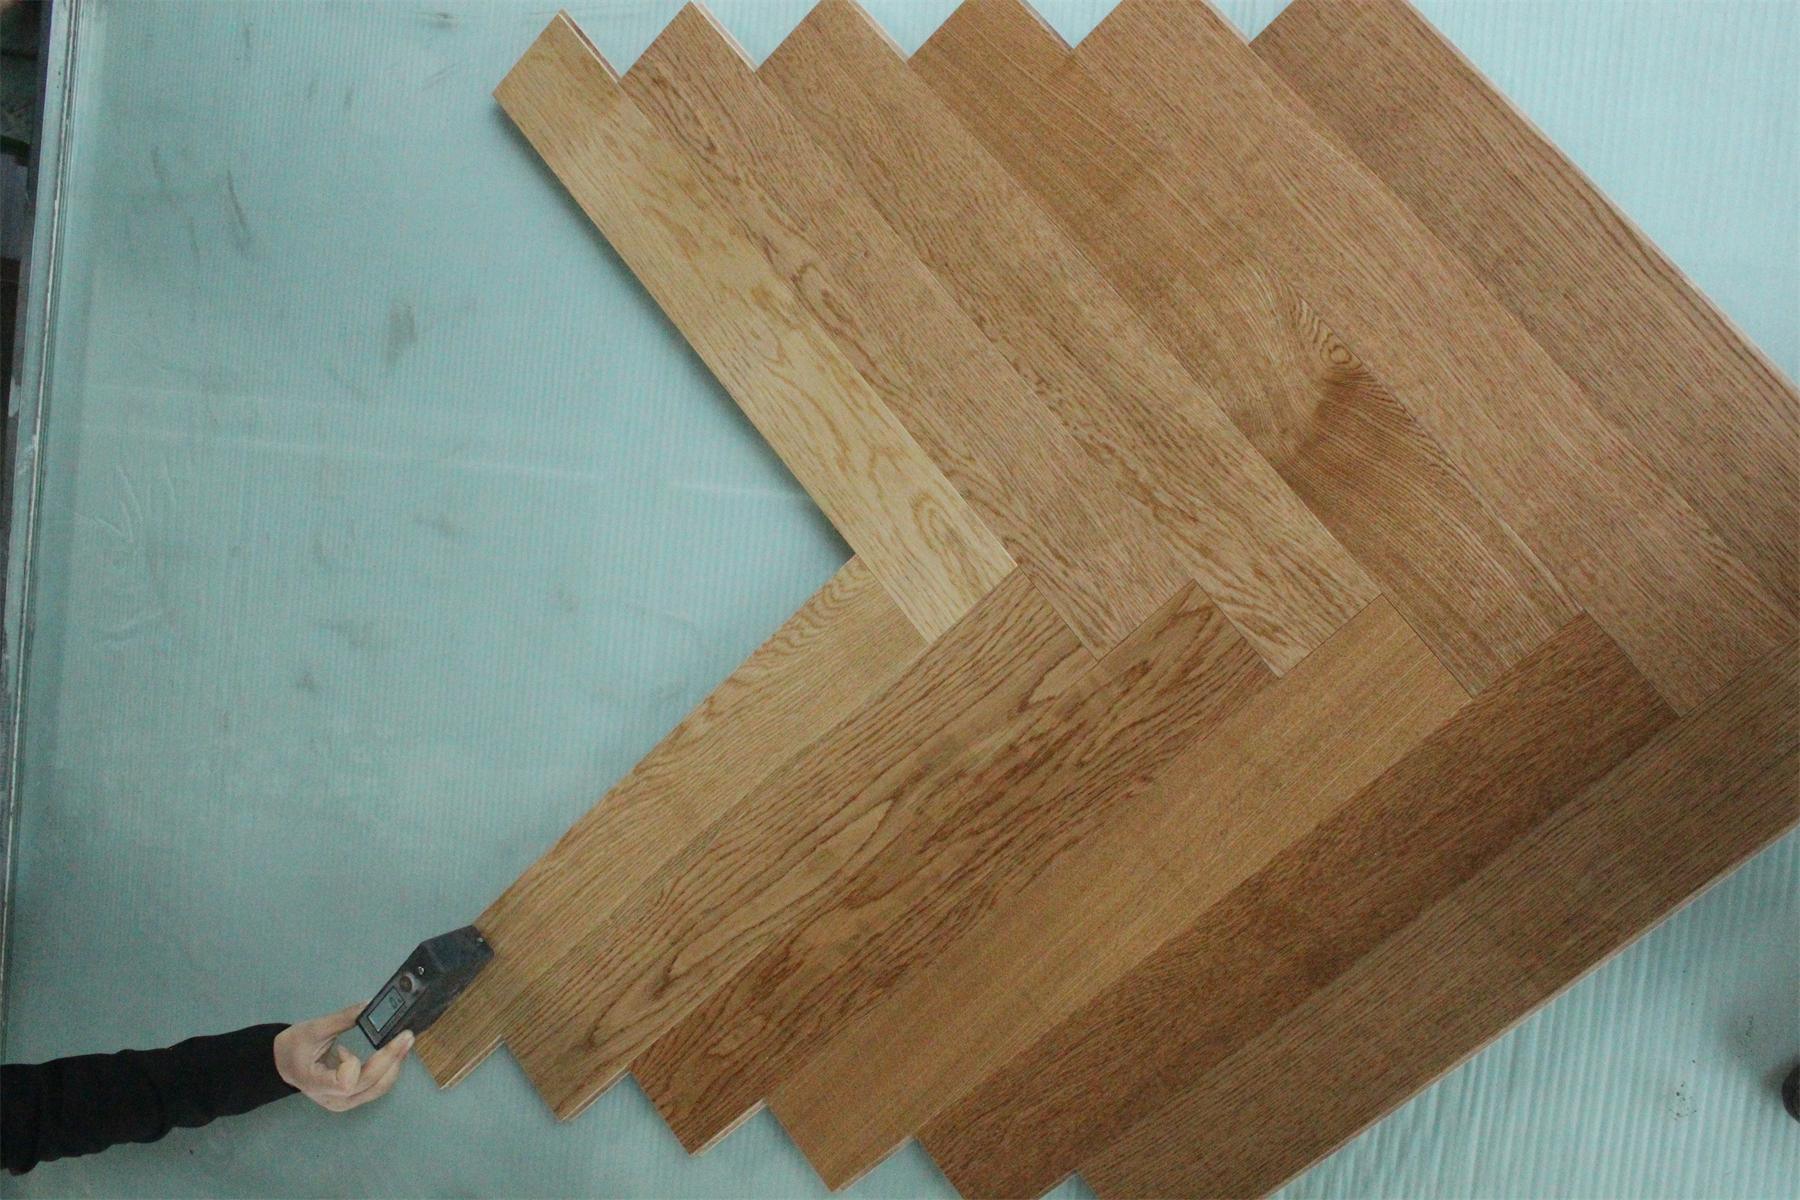 Kd CE Oak Herringbone Engineered Wood Flooring